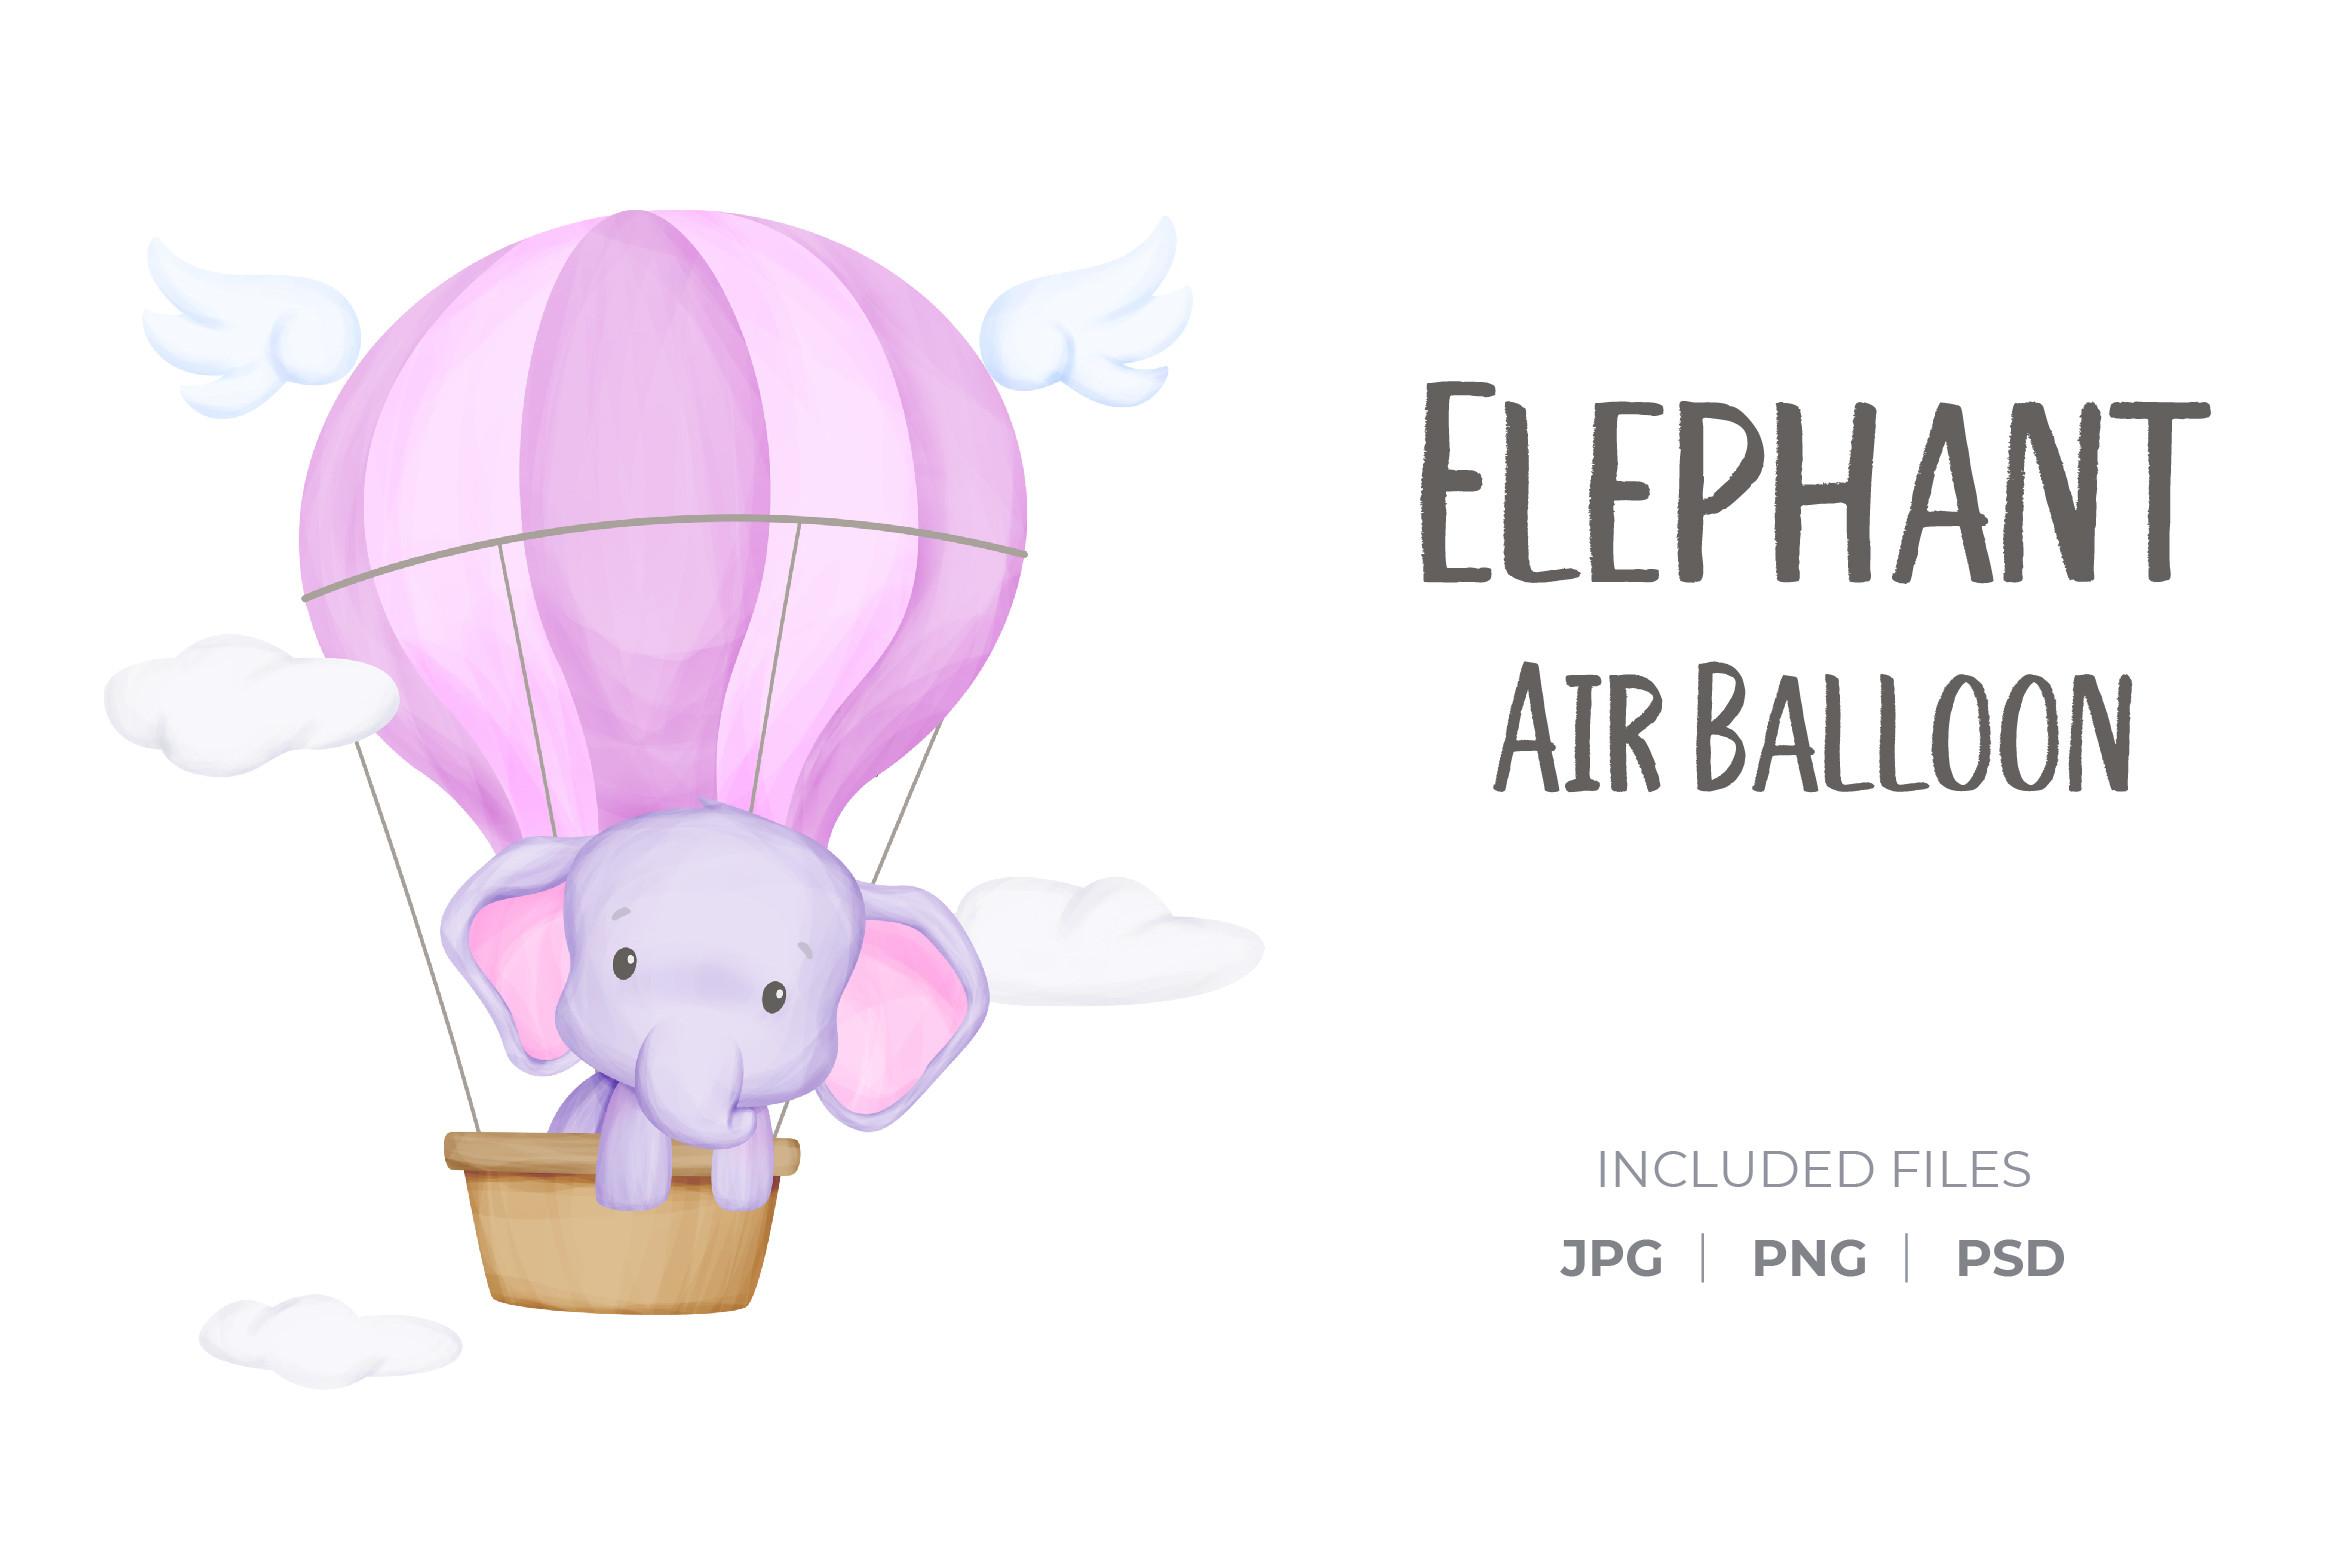 Elephant and Air Balloon